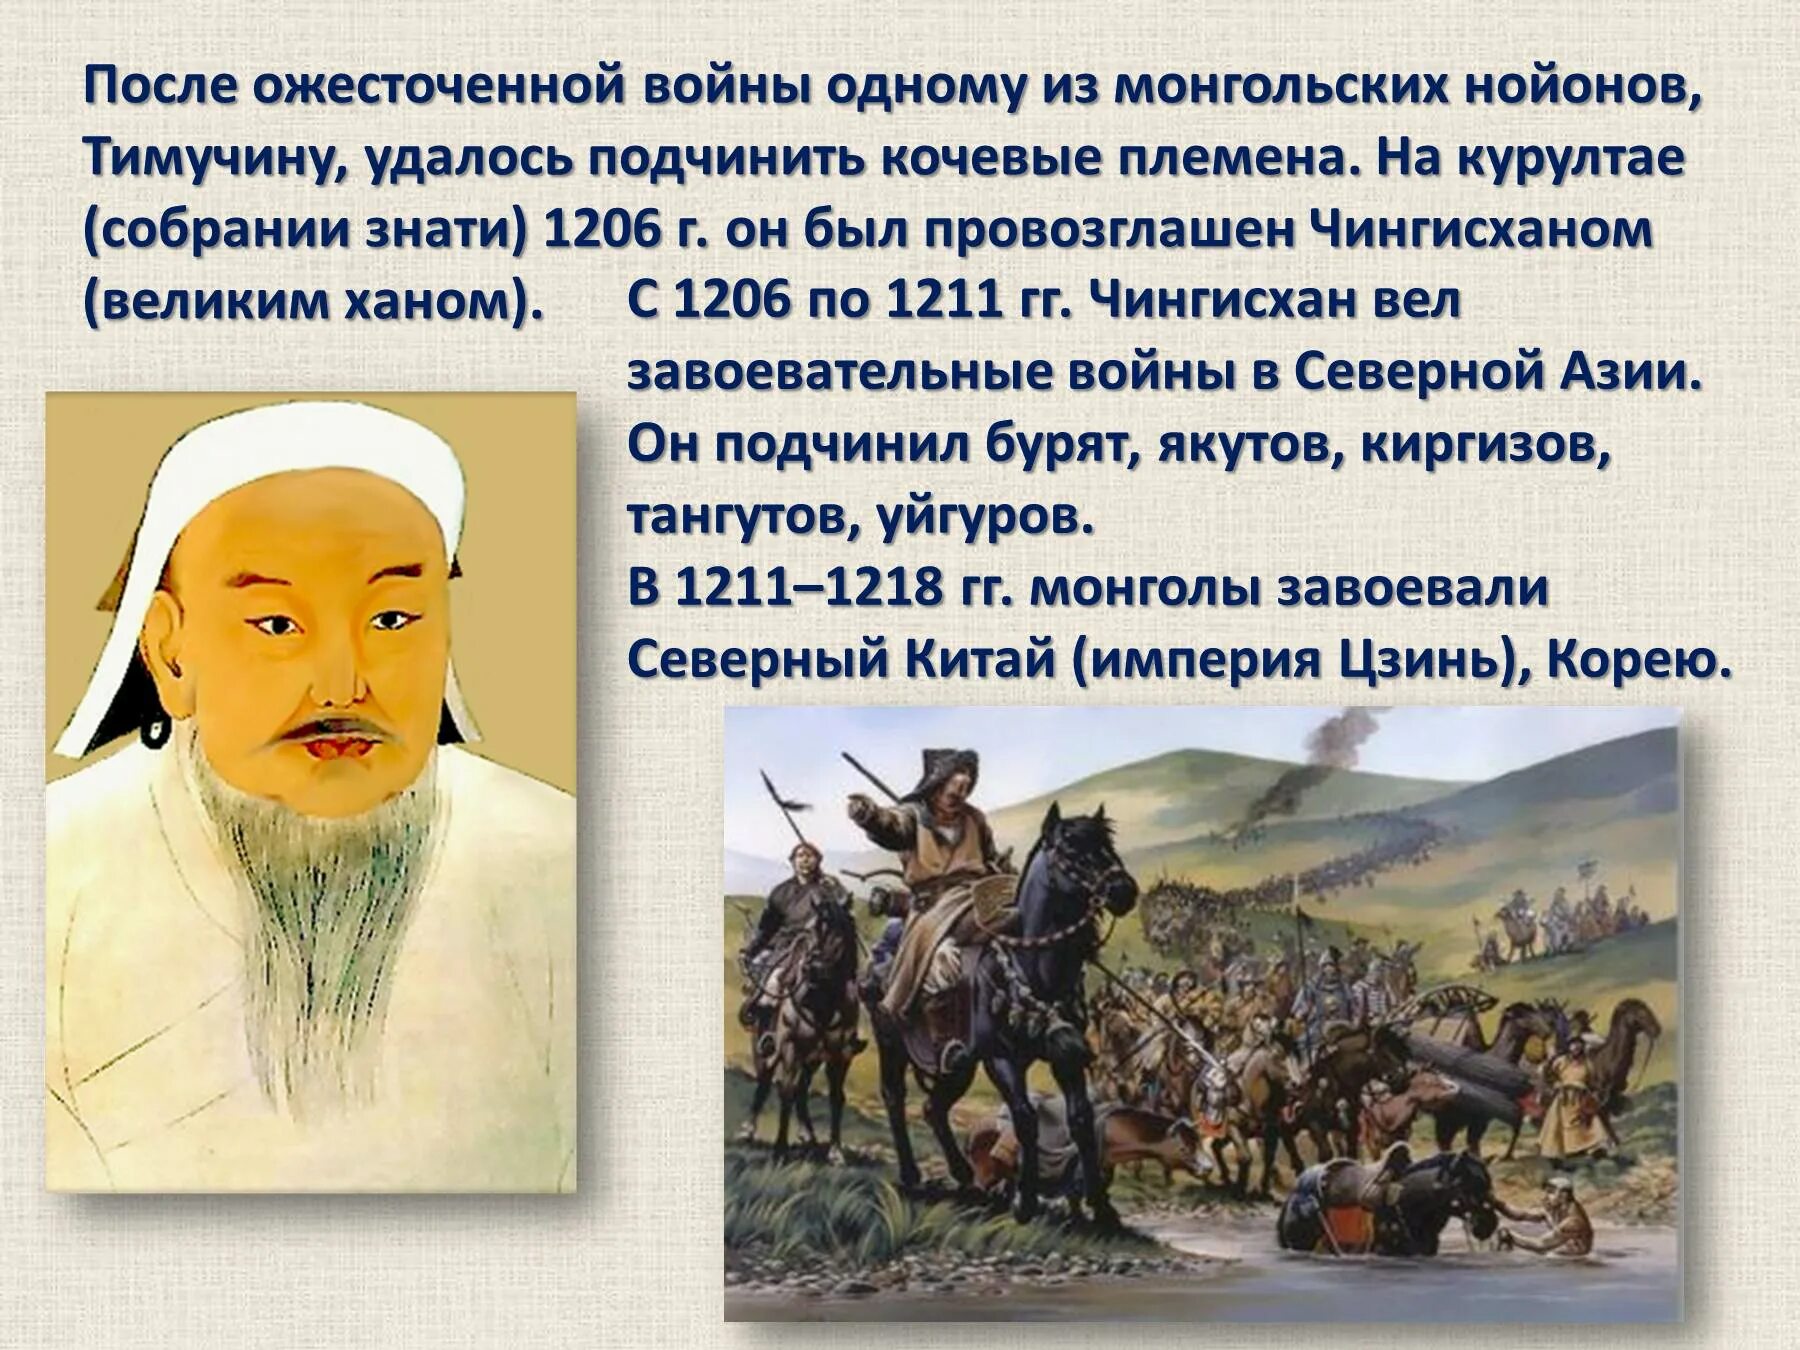 Монгольская империя конспект урока 6 класс. Монголия Чингис Хан. Темучин-нойон. Чингисхана - Великого хана.